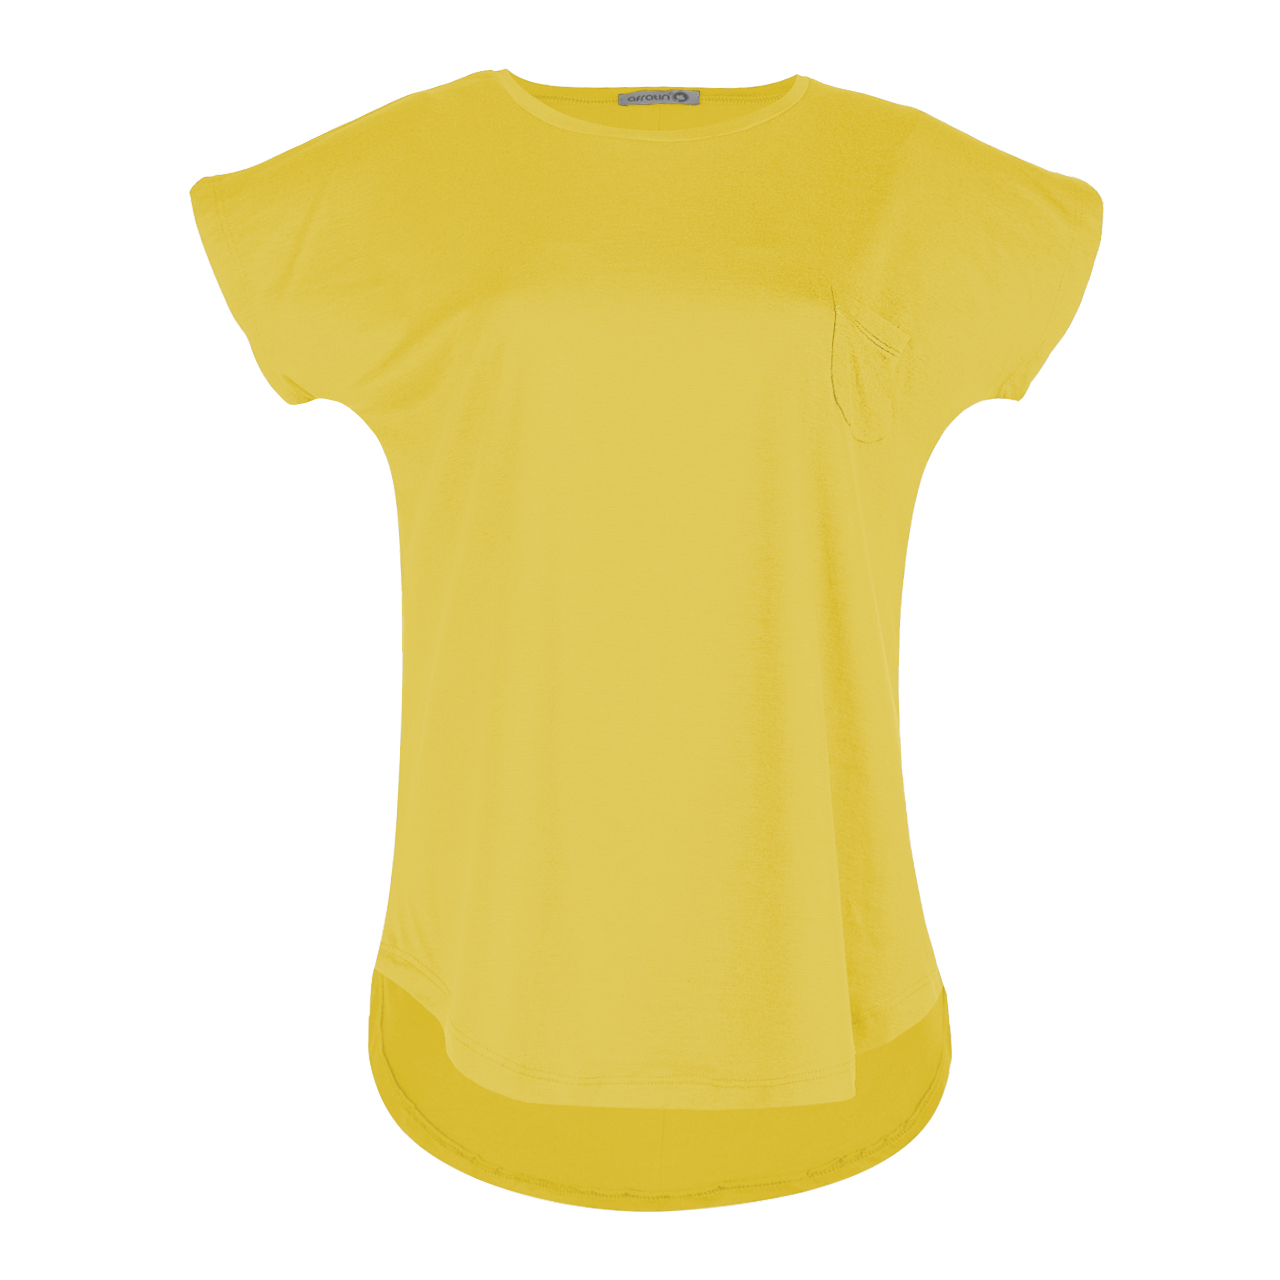  تی شرت زنانه افراتین کد 2517 رنگ زرد -  - 1